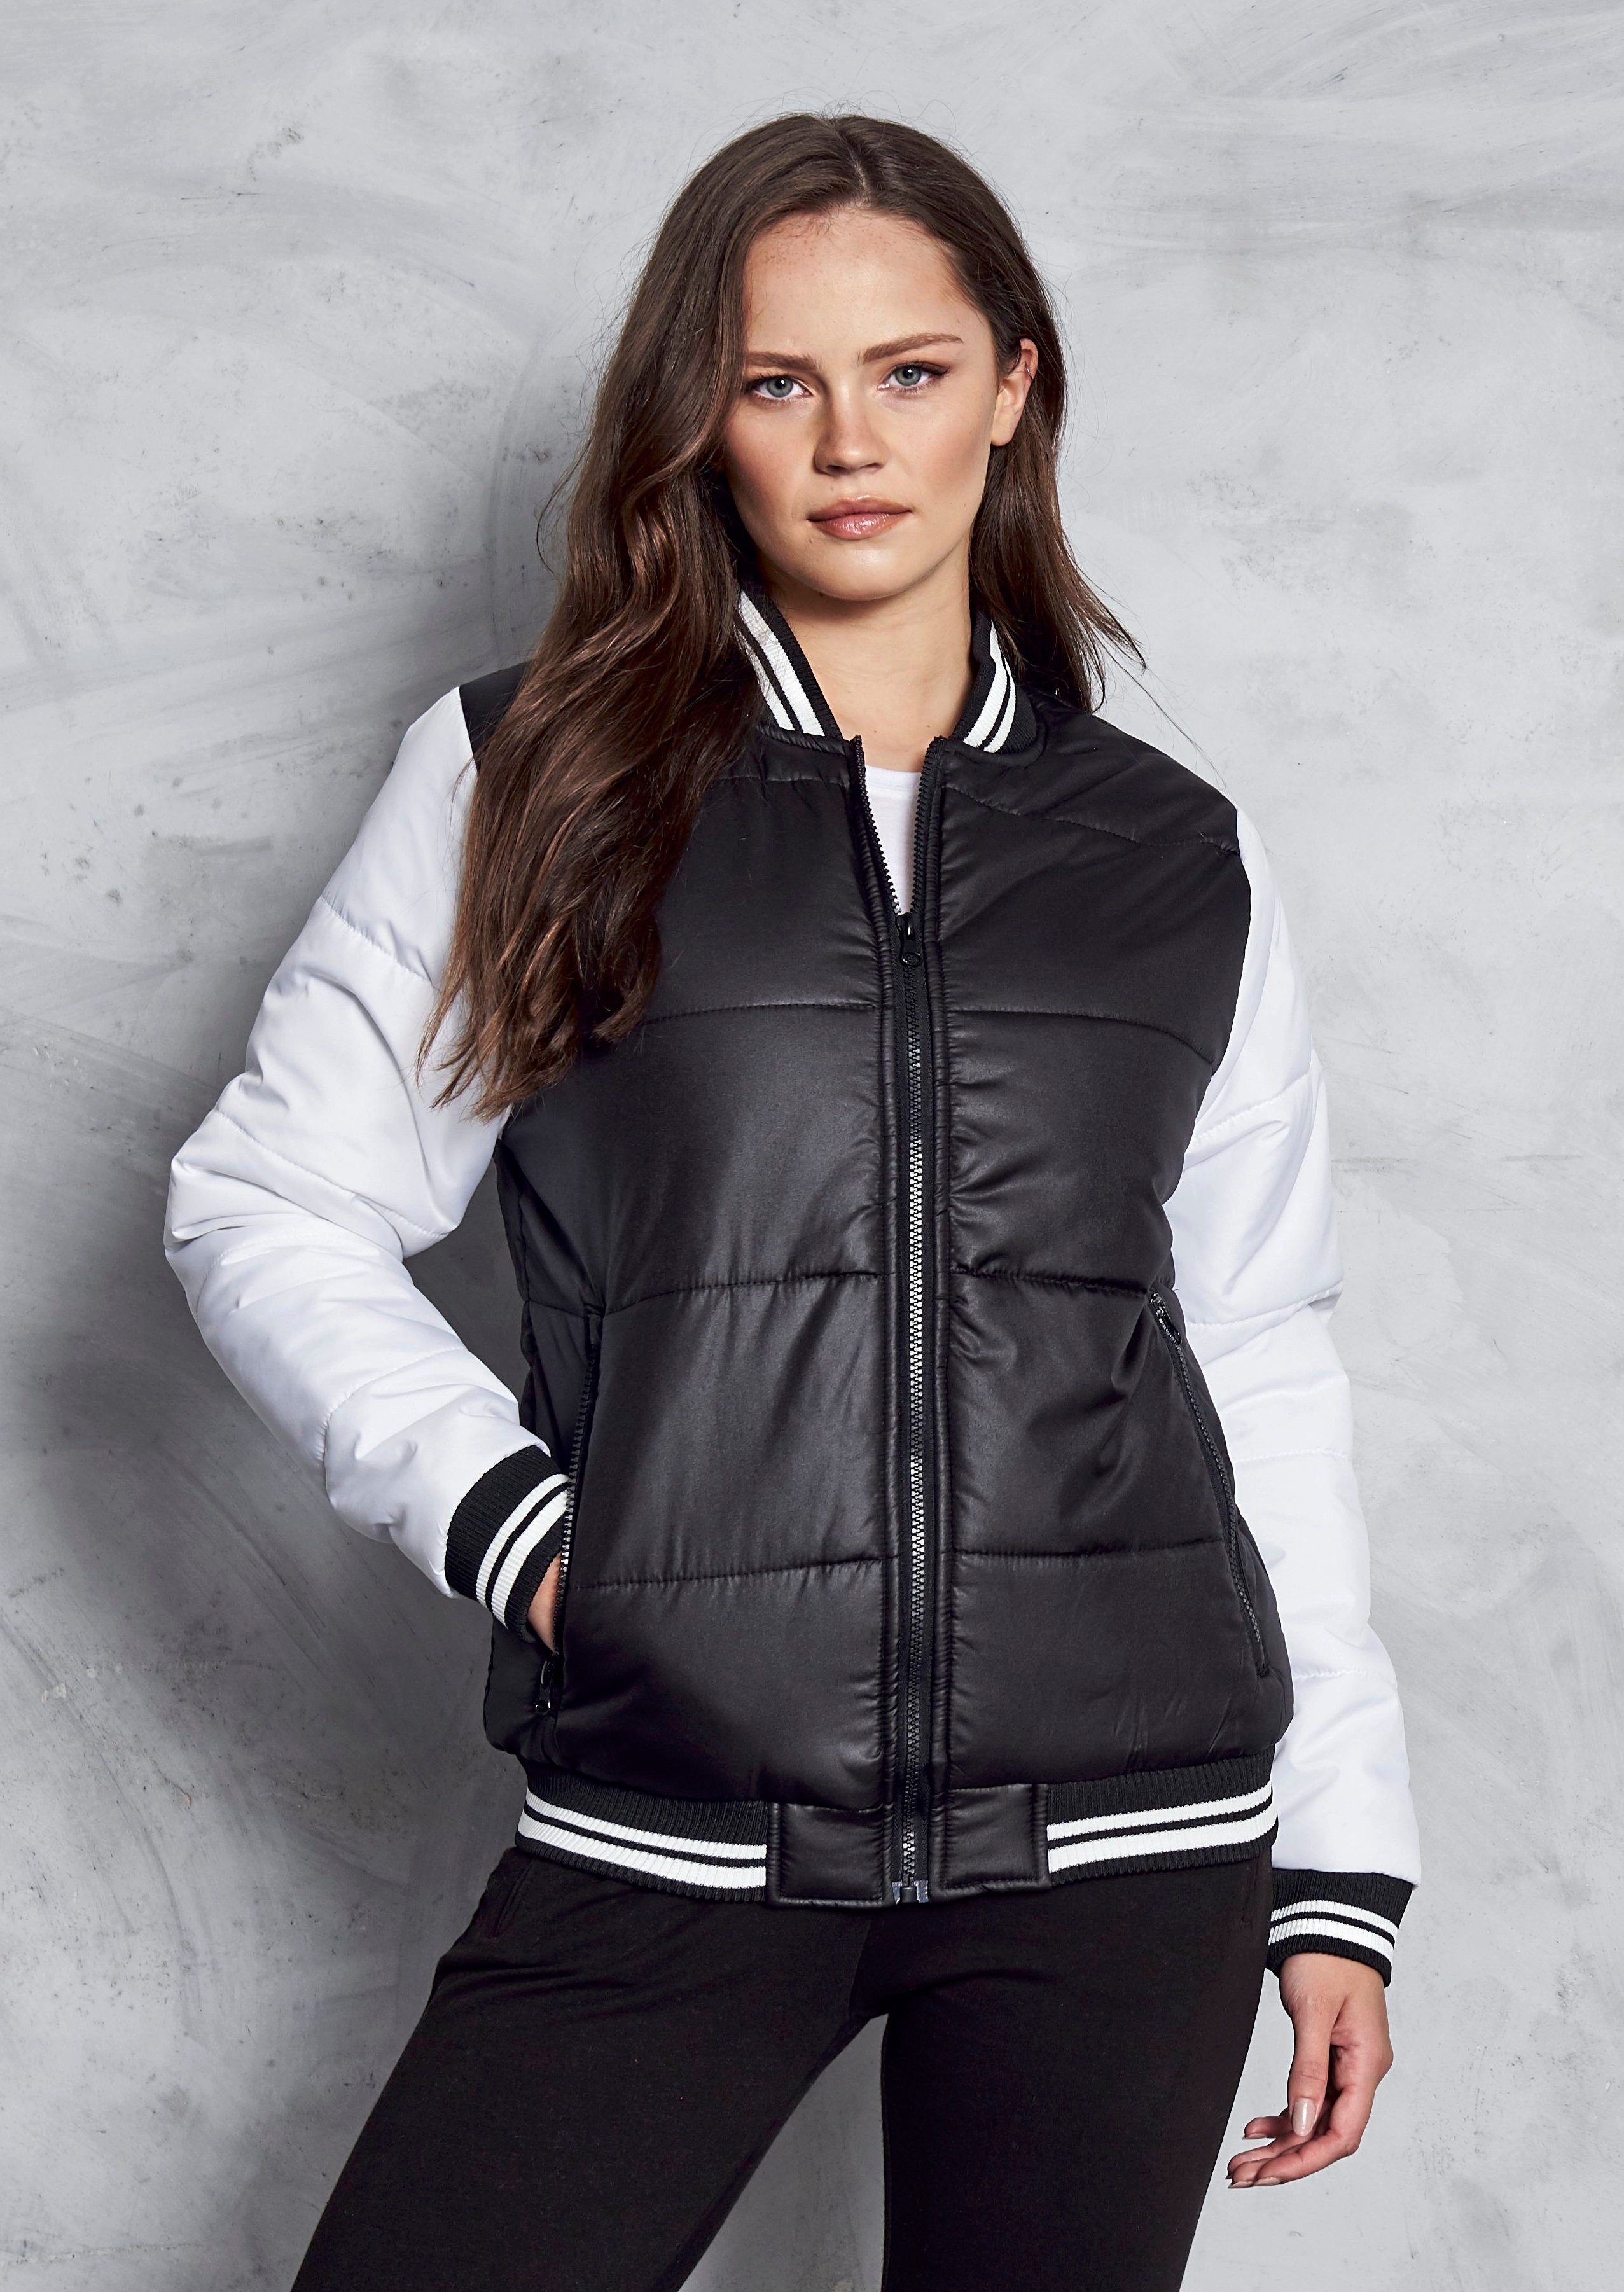 Frauen Style Bomber Jacket Damen Bomberjacke / Mädchen u. Jacken für AWDIS College Jacke Puffer